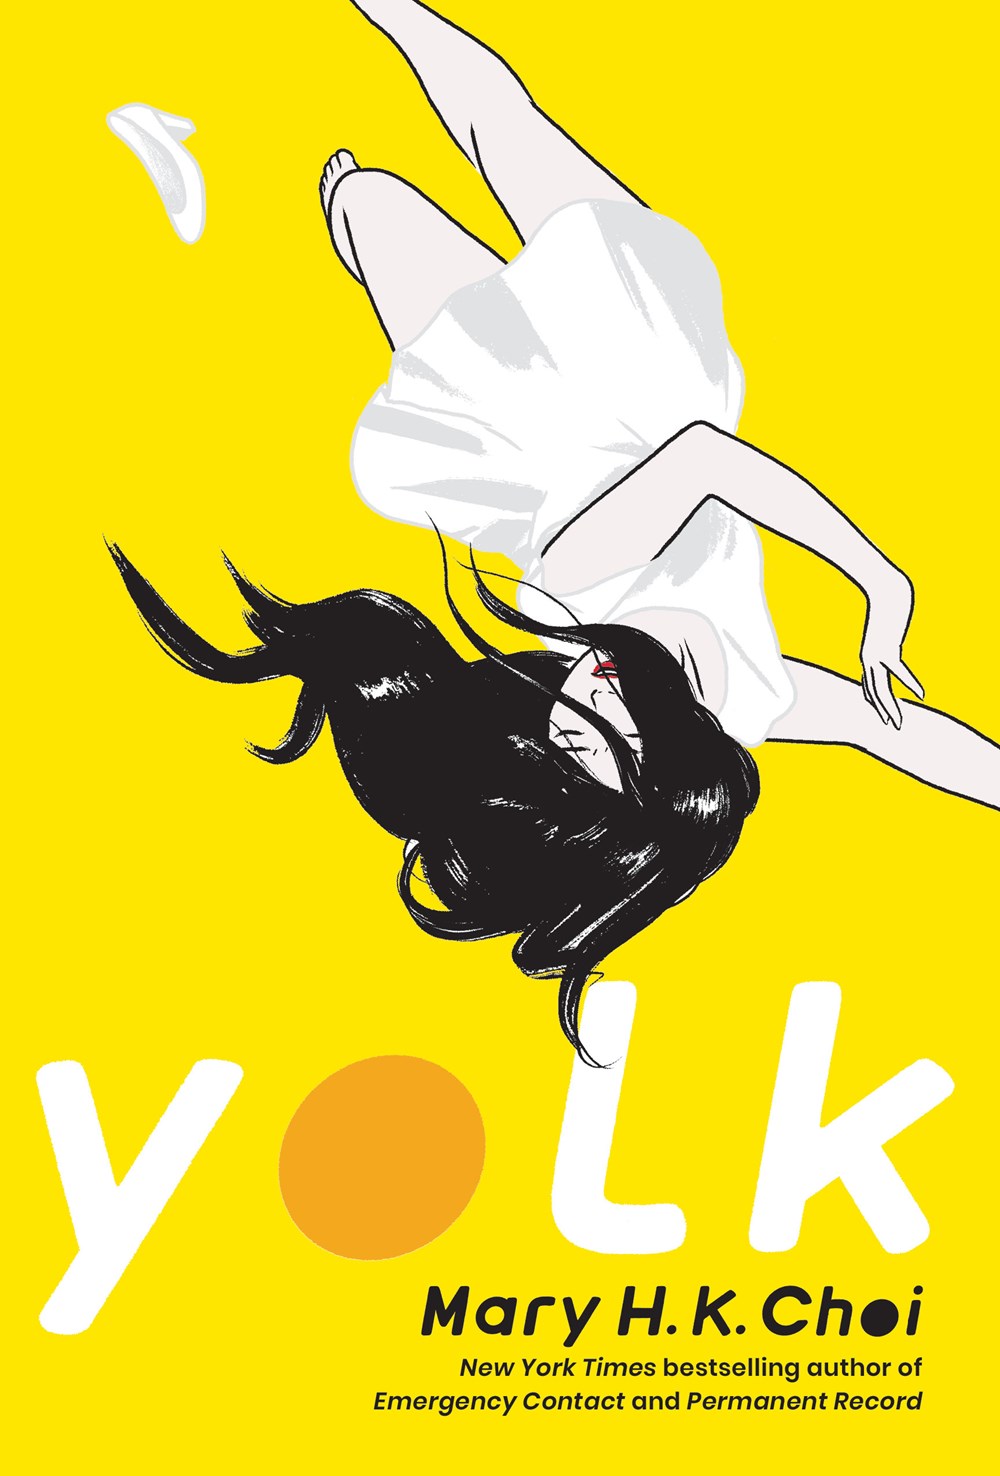 Yolk books